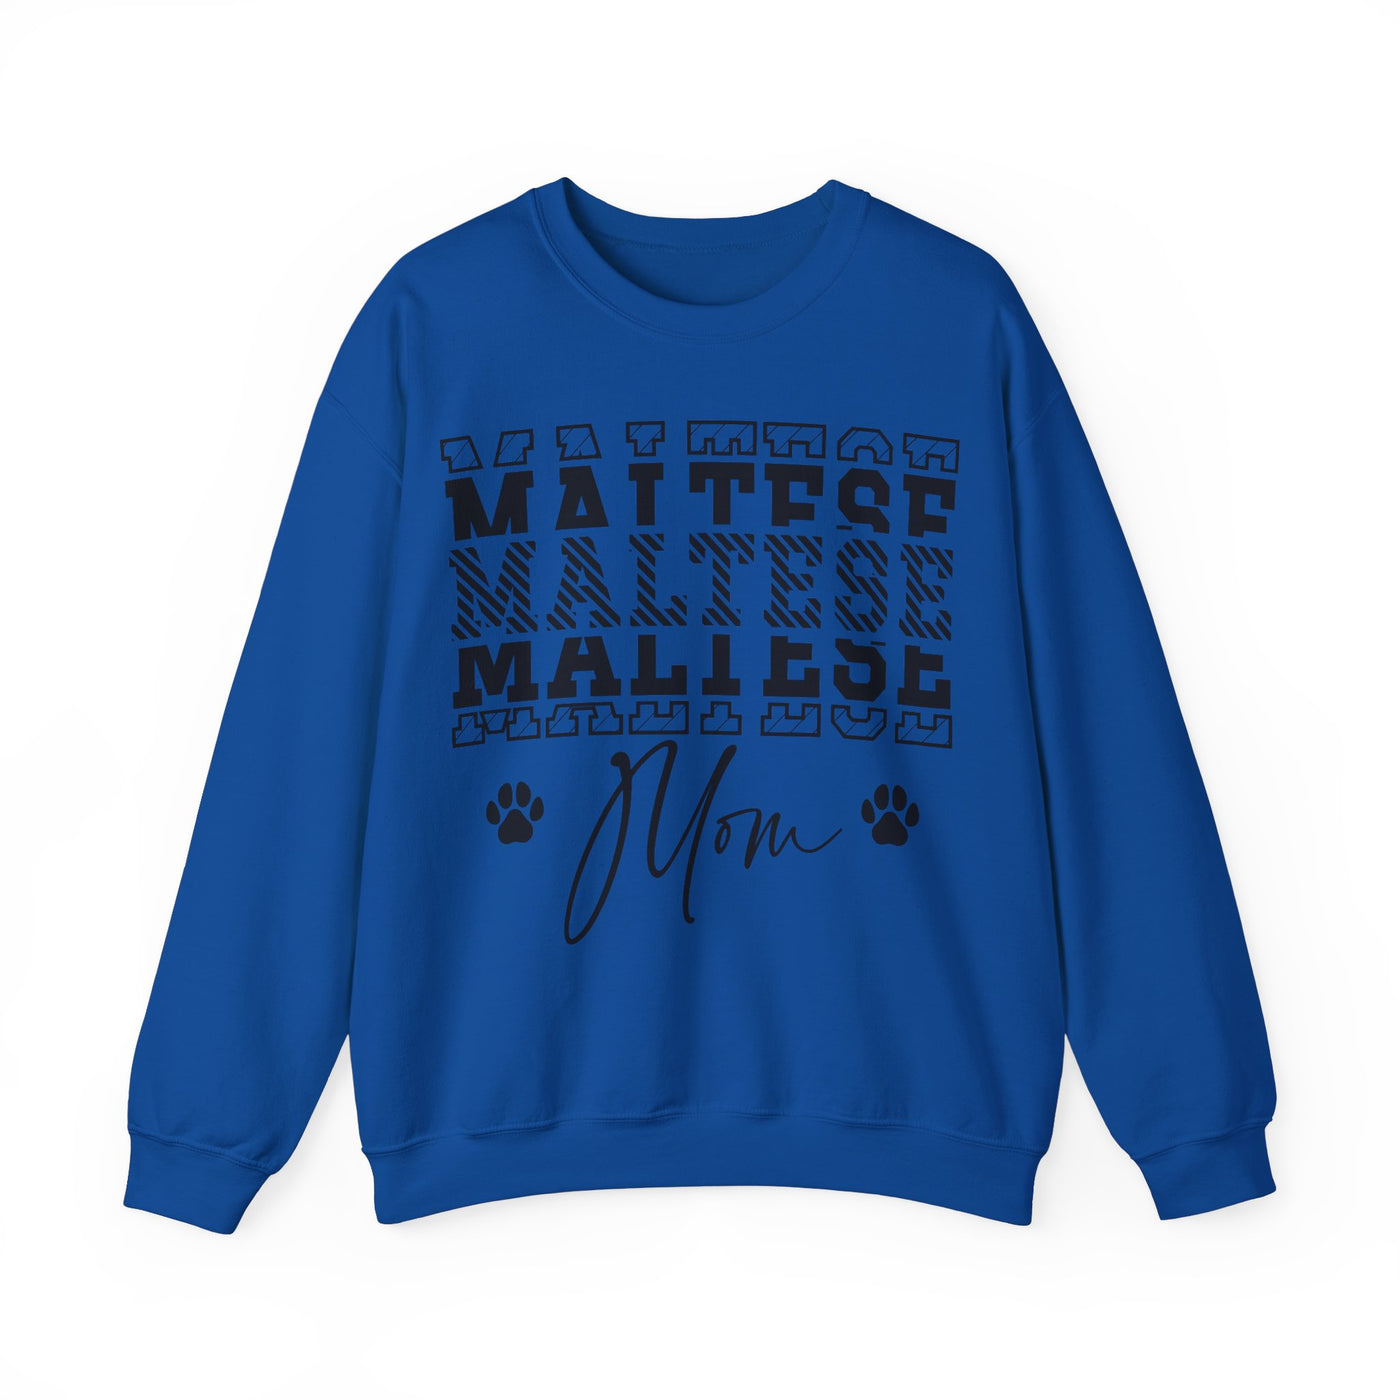 Maltese Mom Sweatshirt